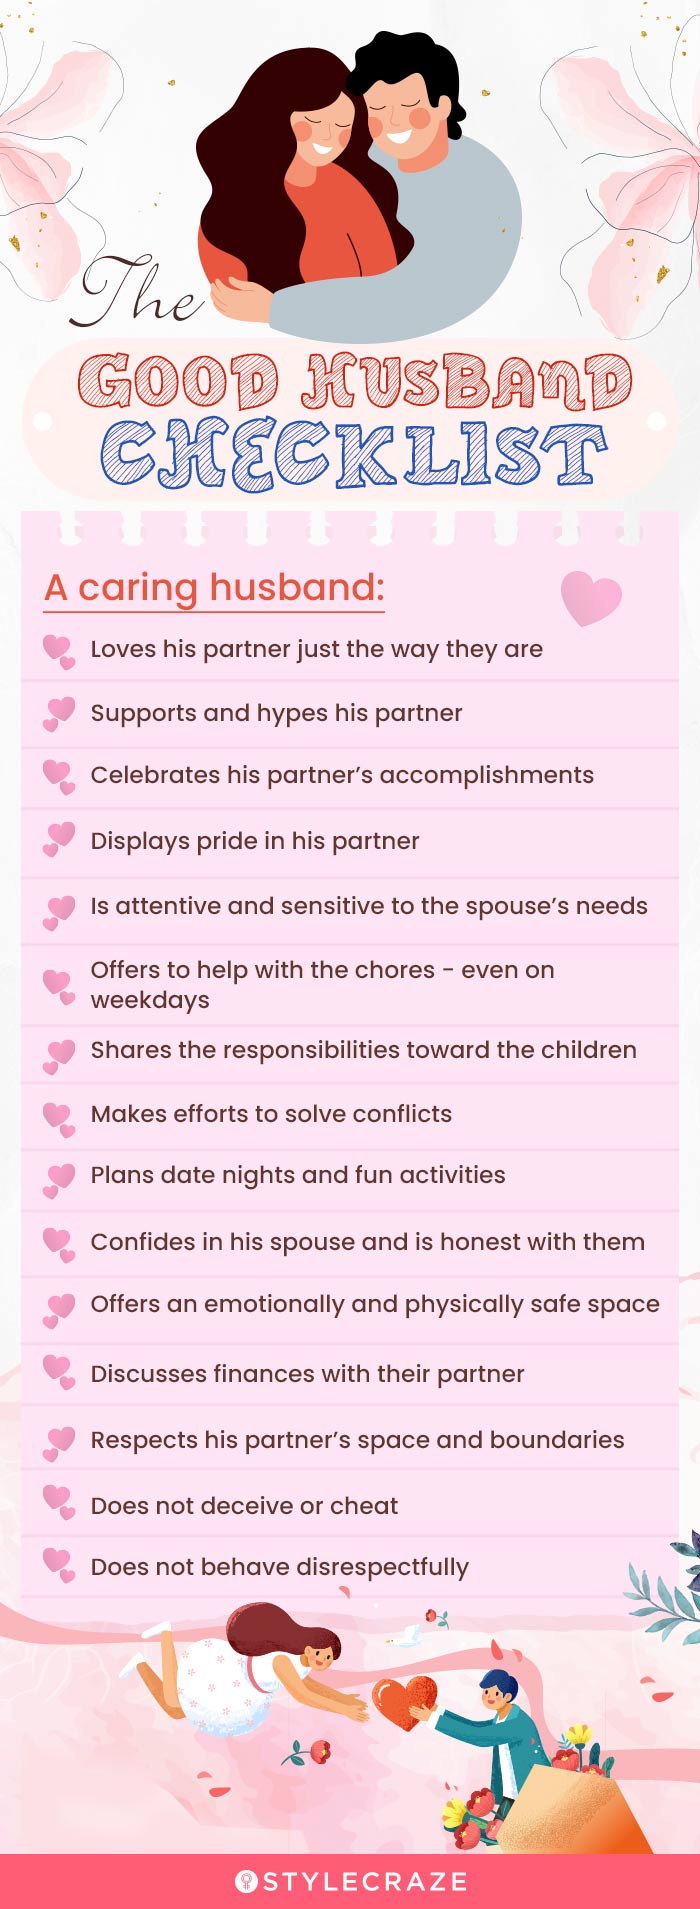 the good husband checklist (infographic)